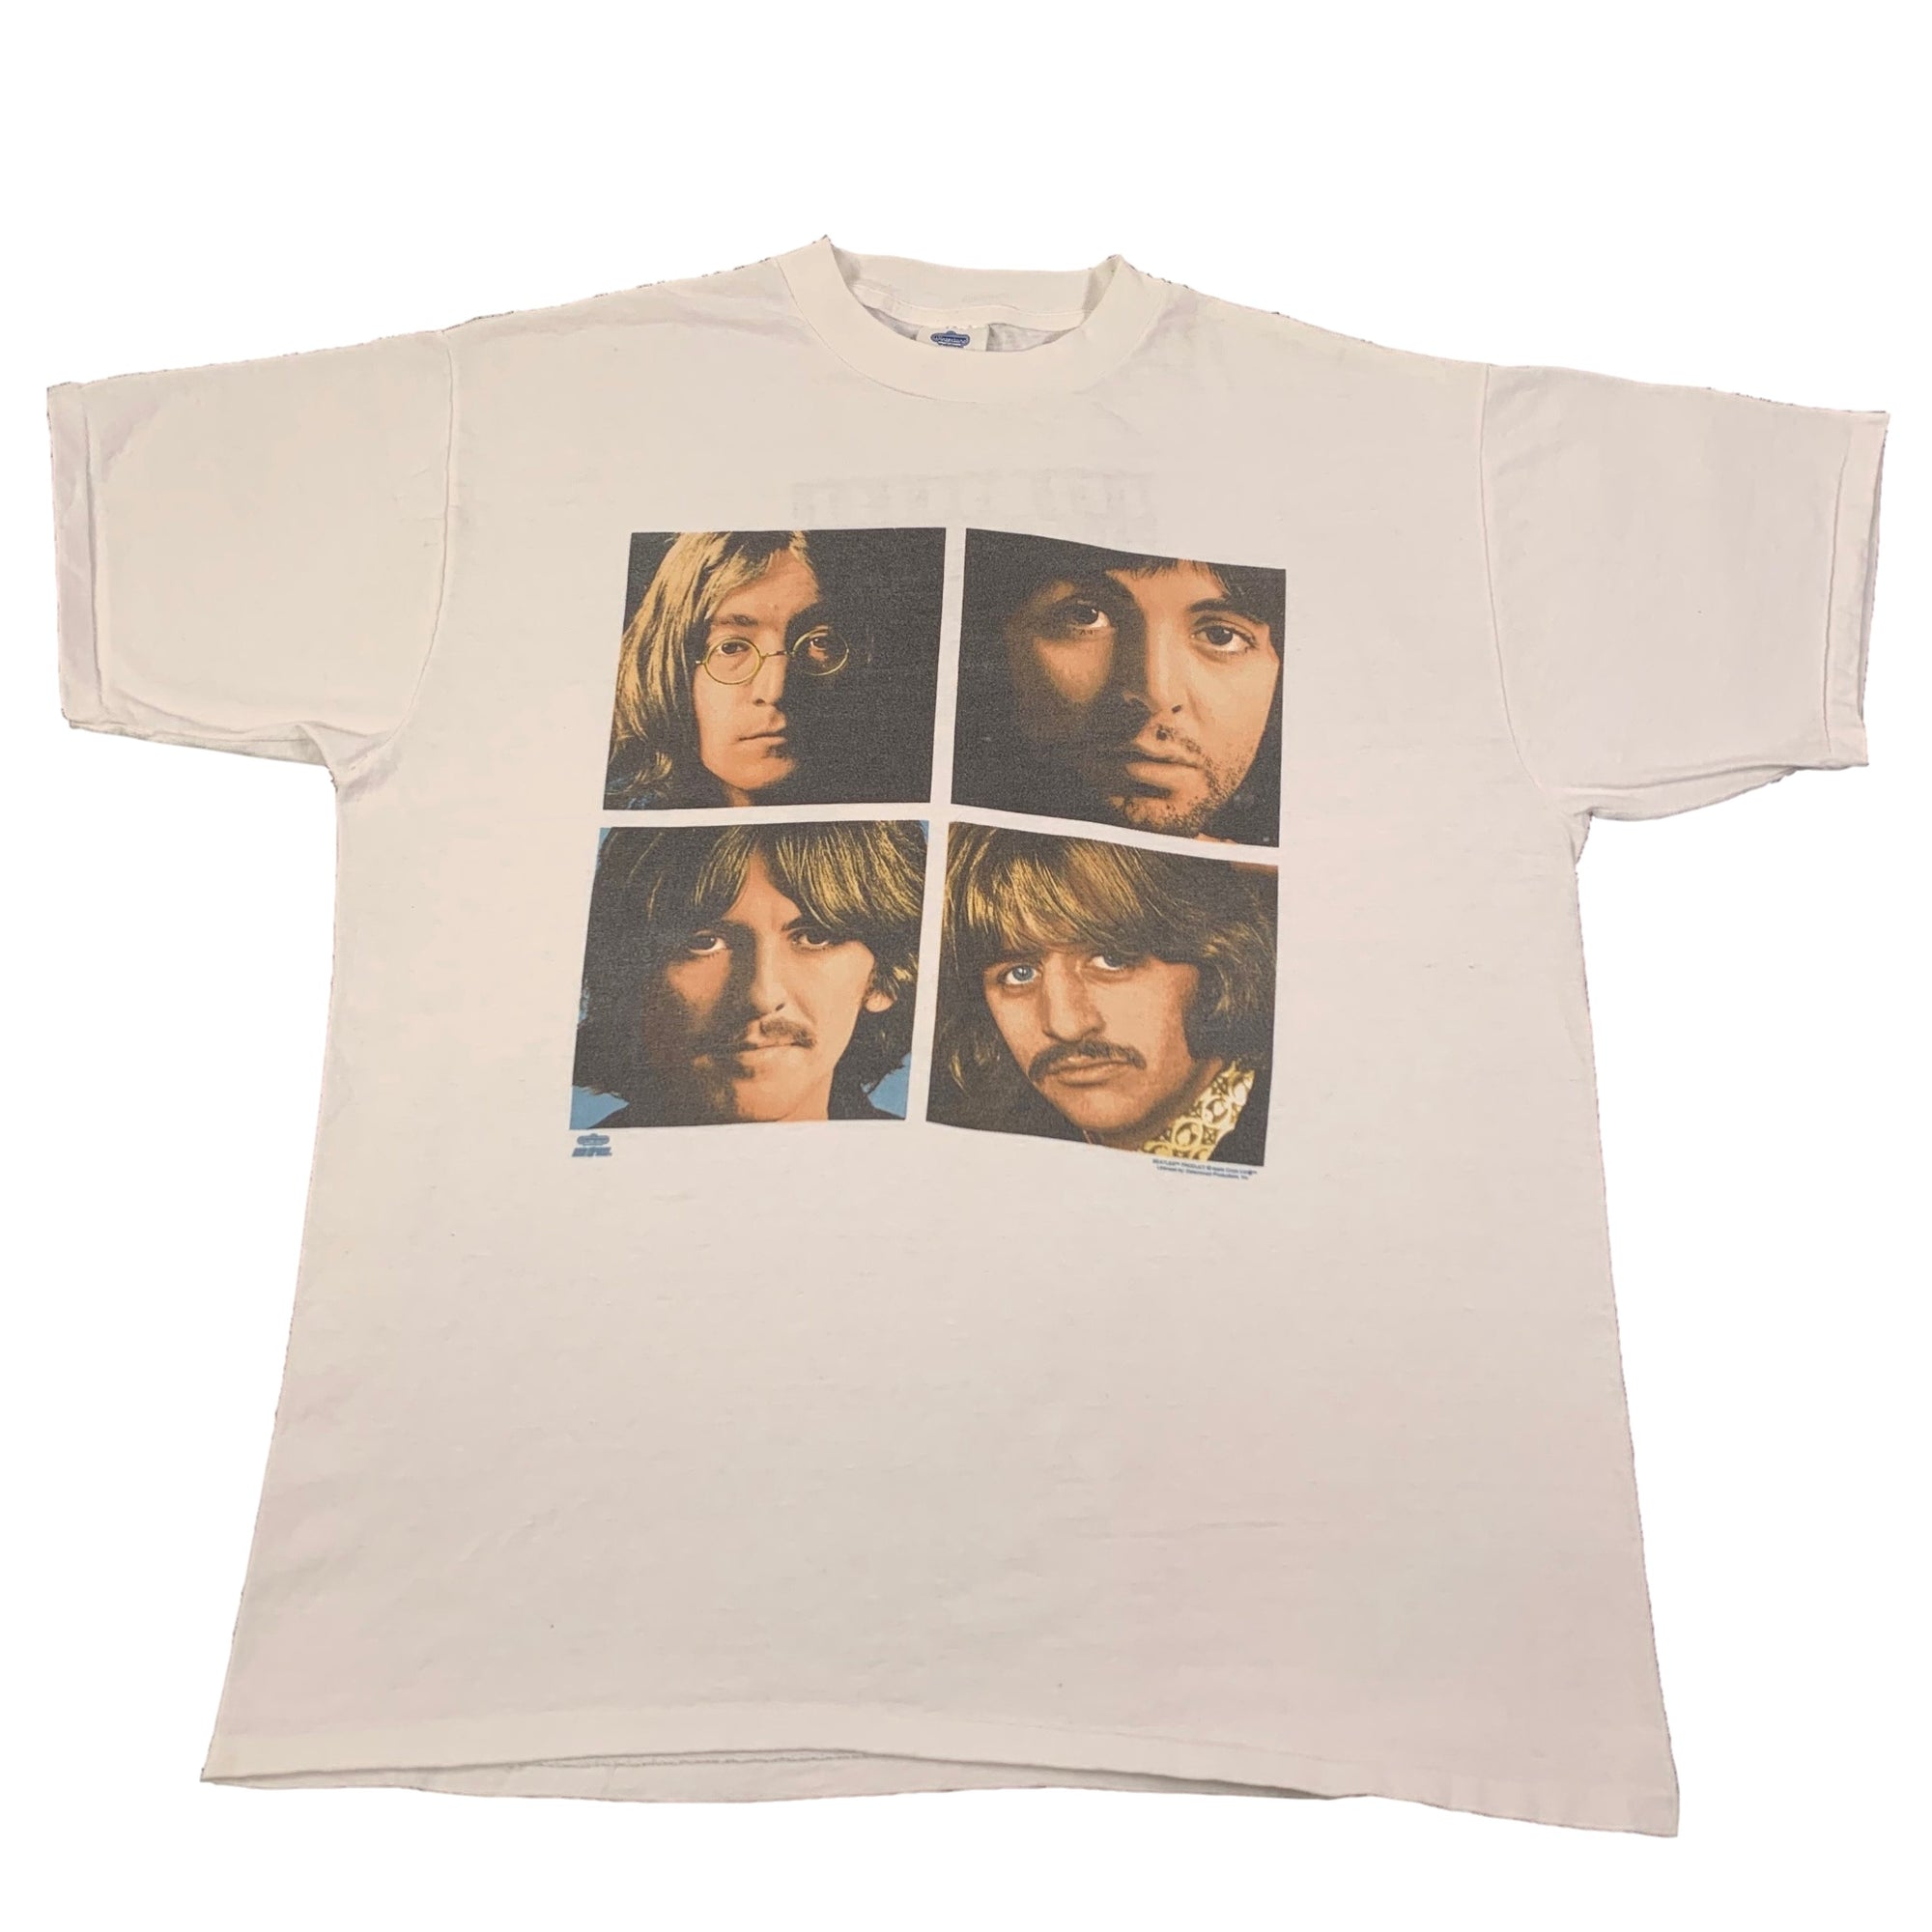 Vintage The Beatles "Apple Corps" T-Shirt - jointcustodydc